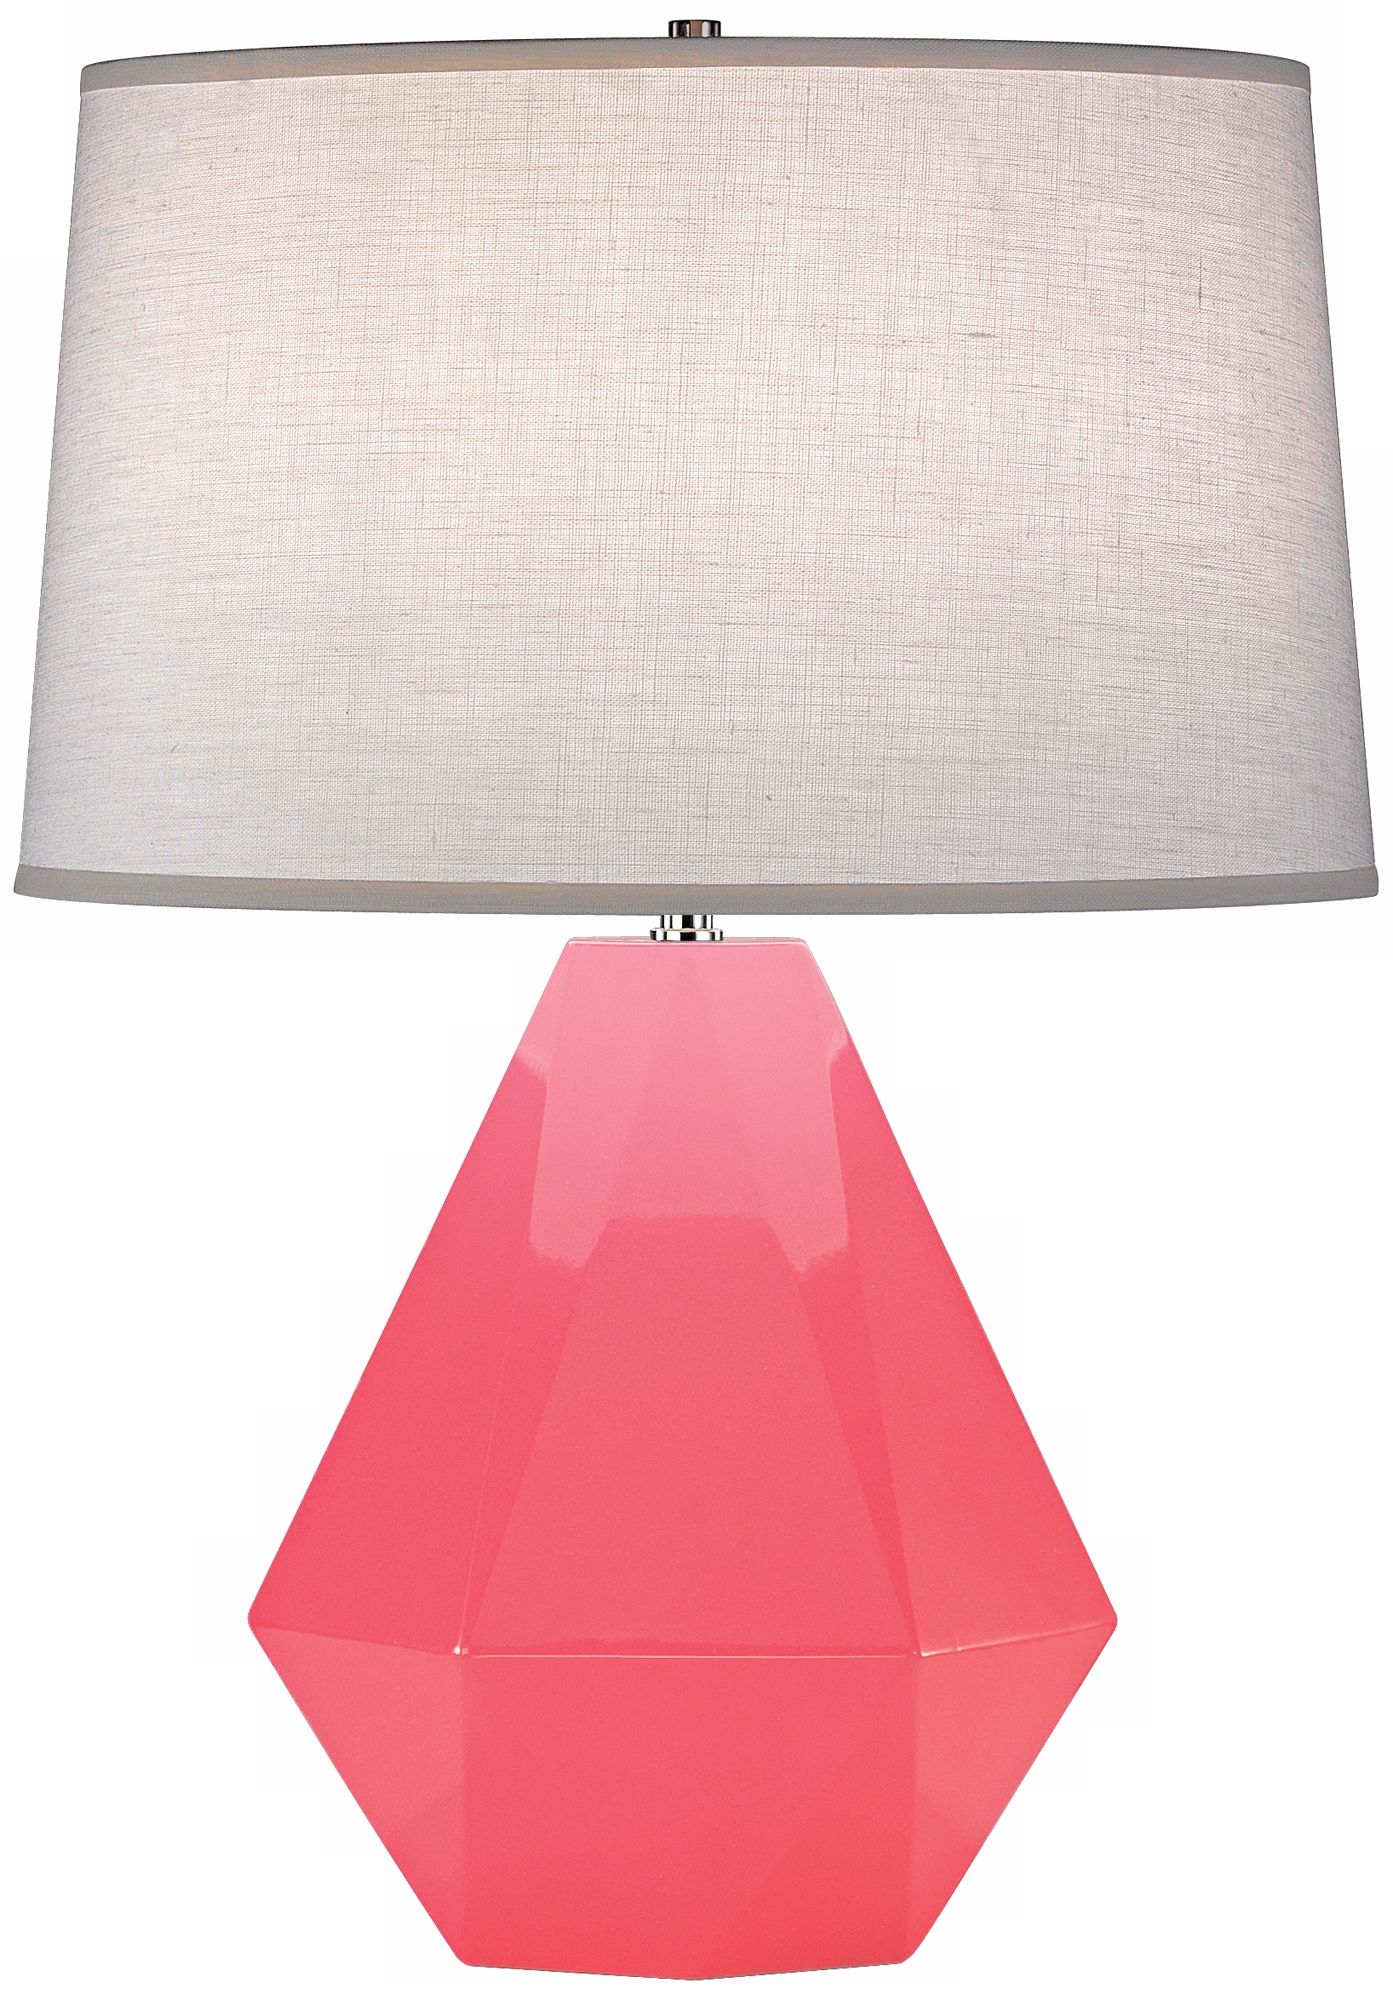 Robert Abbey Delta Schiaparelli Pink 22 1/2" High Table Lamp - Image 0